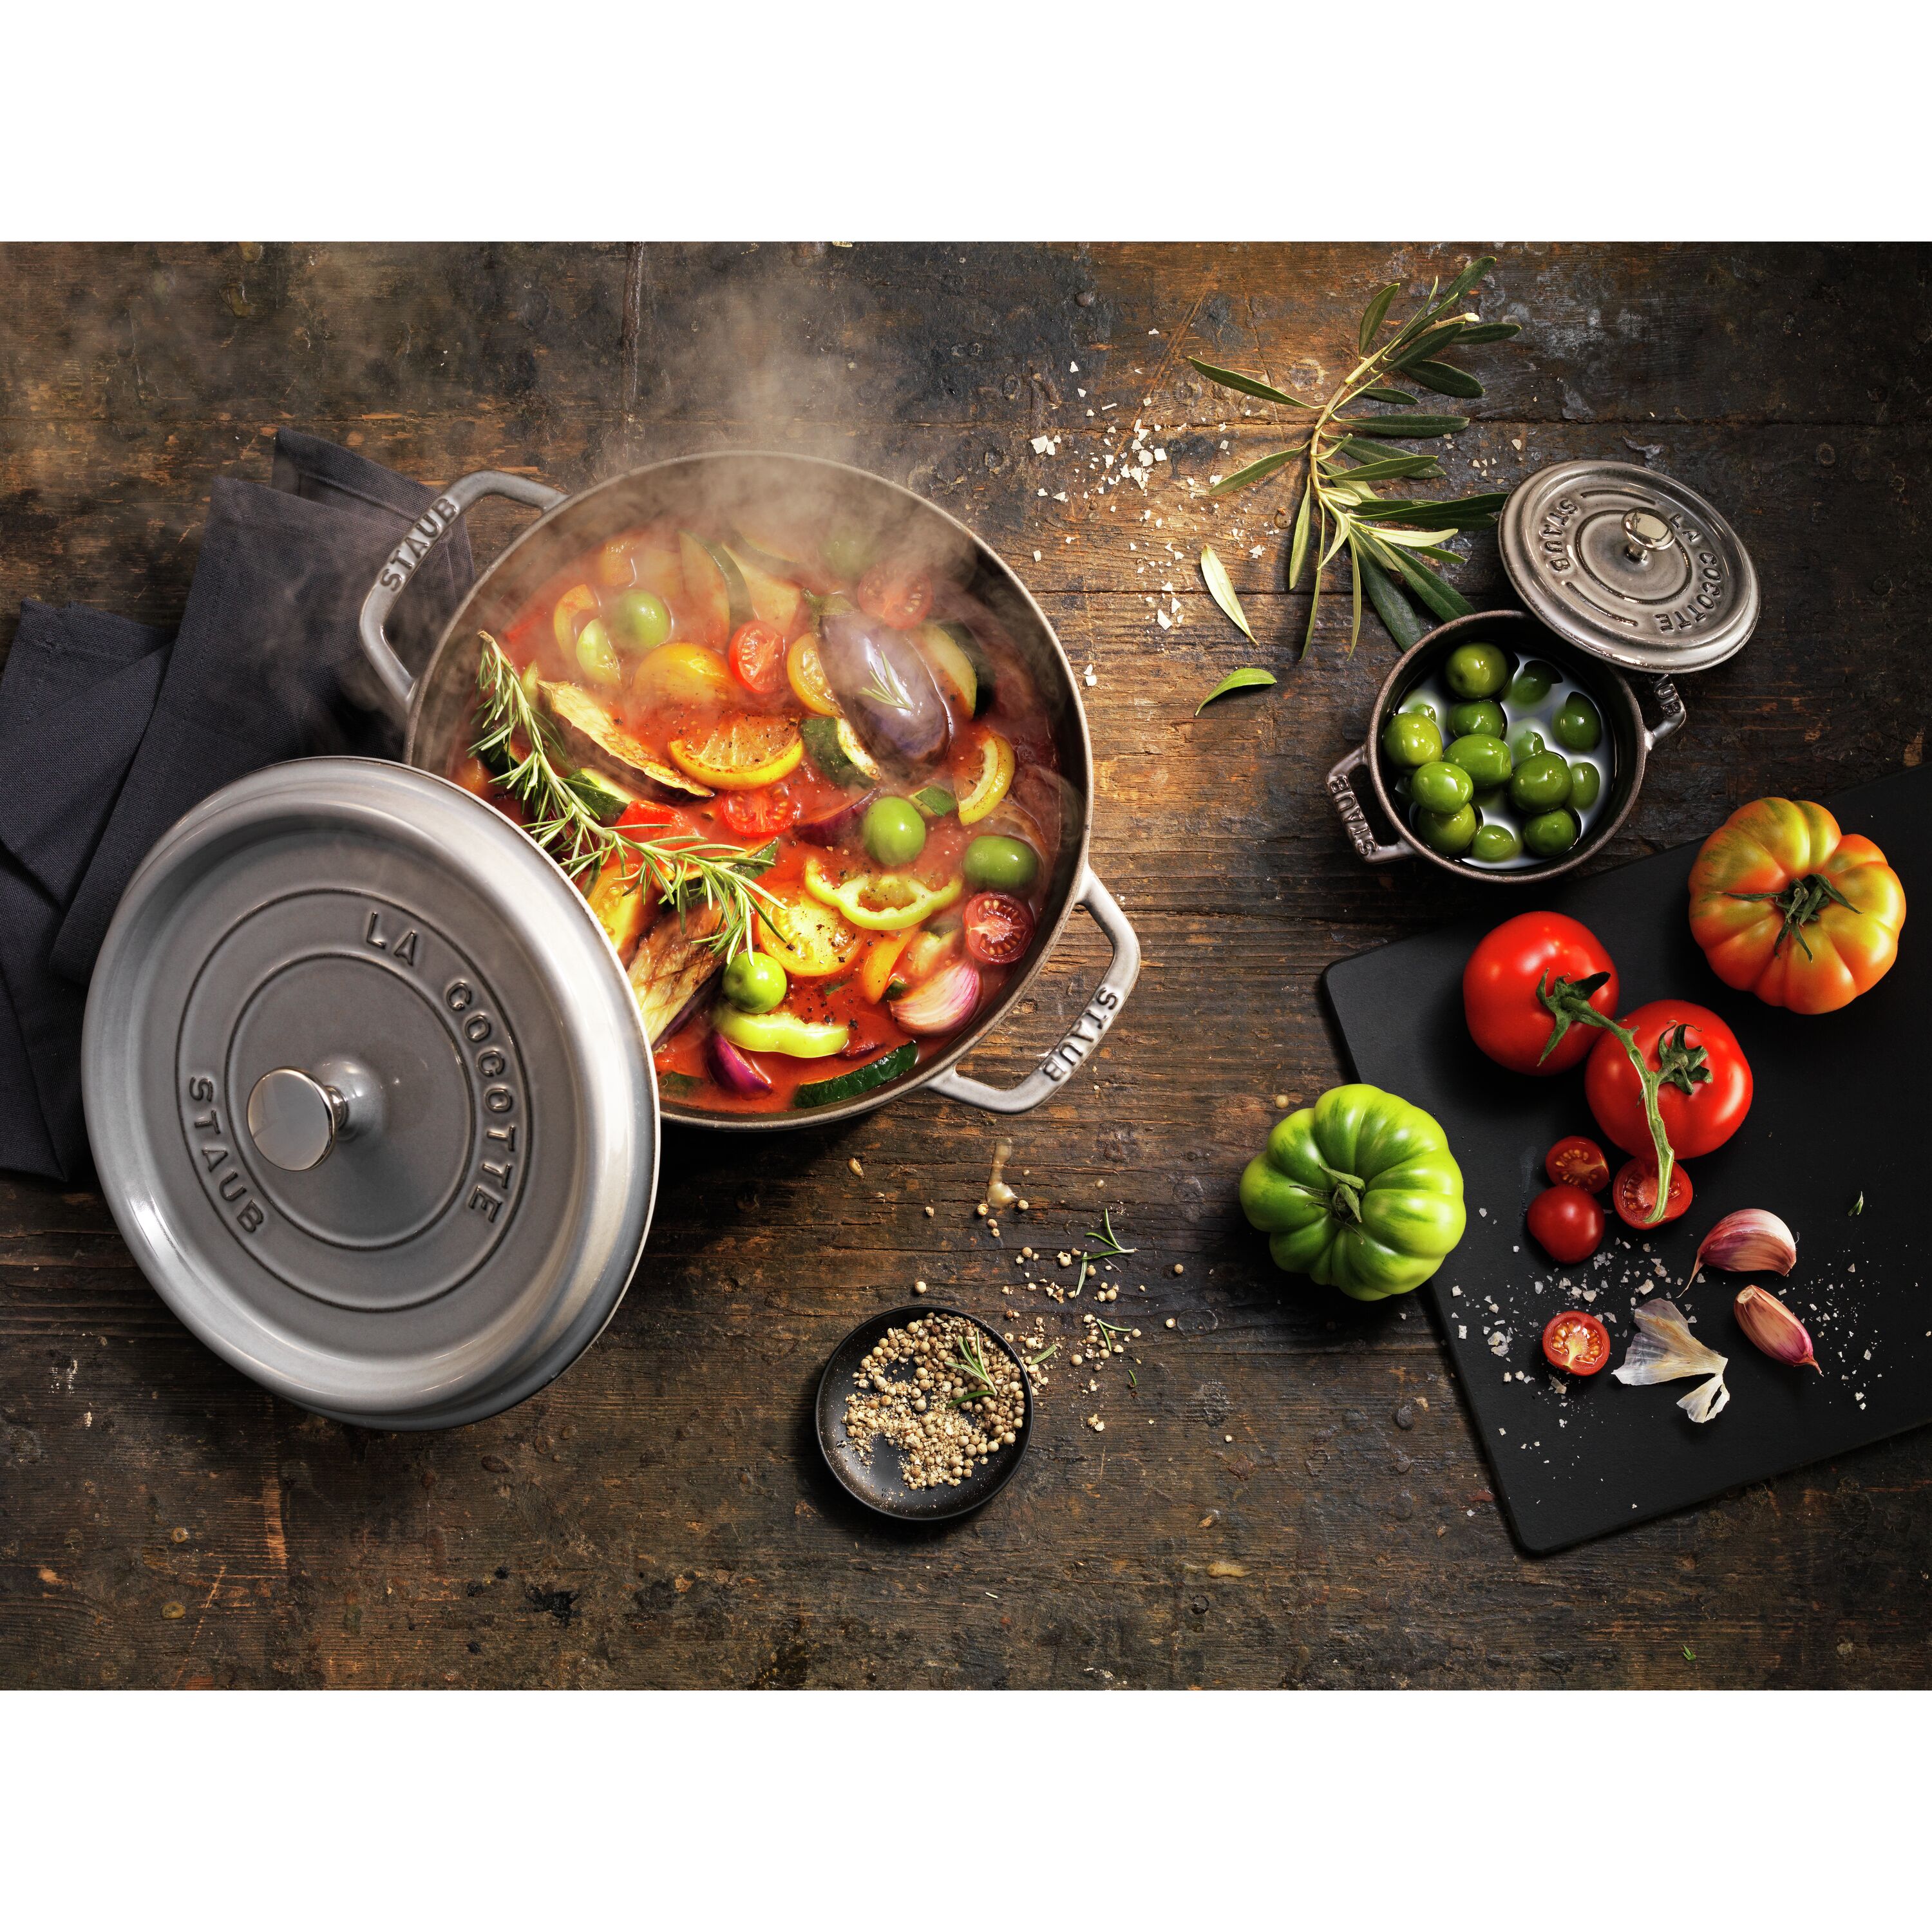 Staub Mini Cast Iron Braiser, 8-inch, Matte Black or Grey on Food52